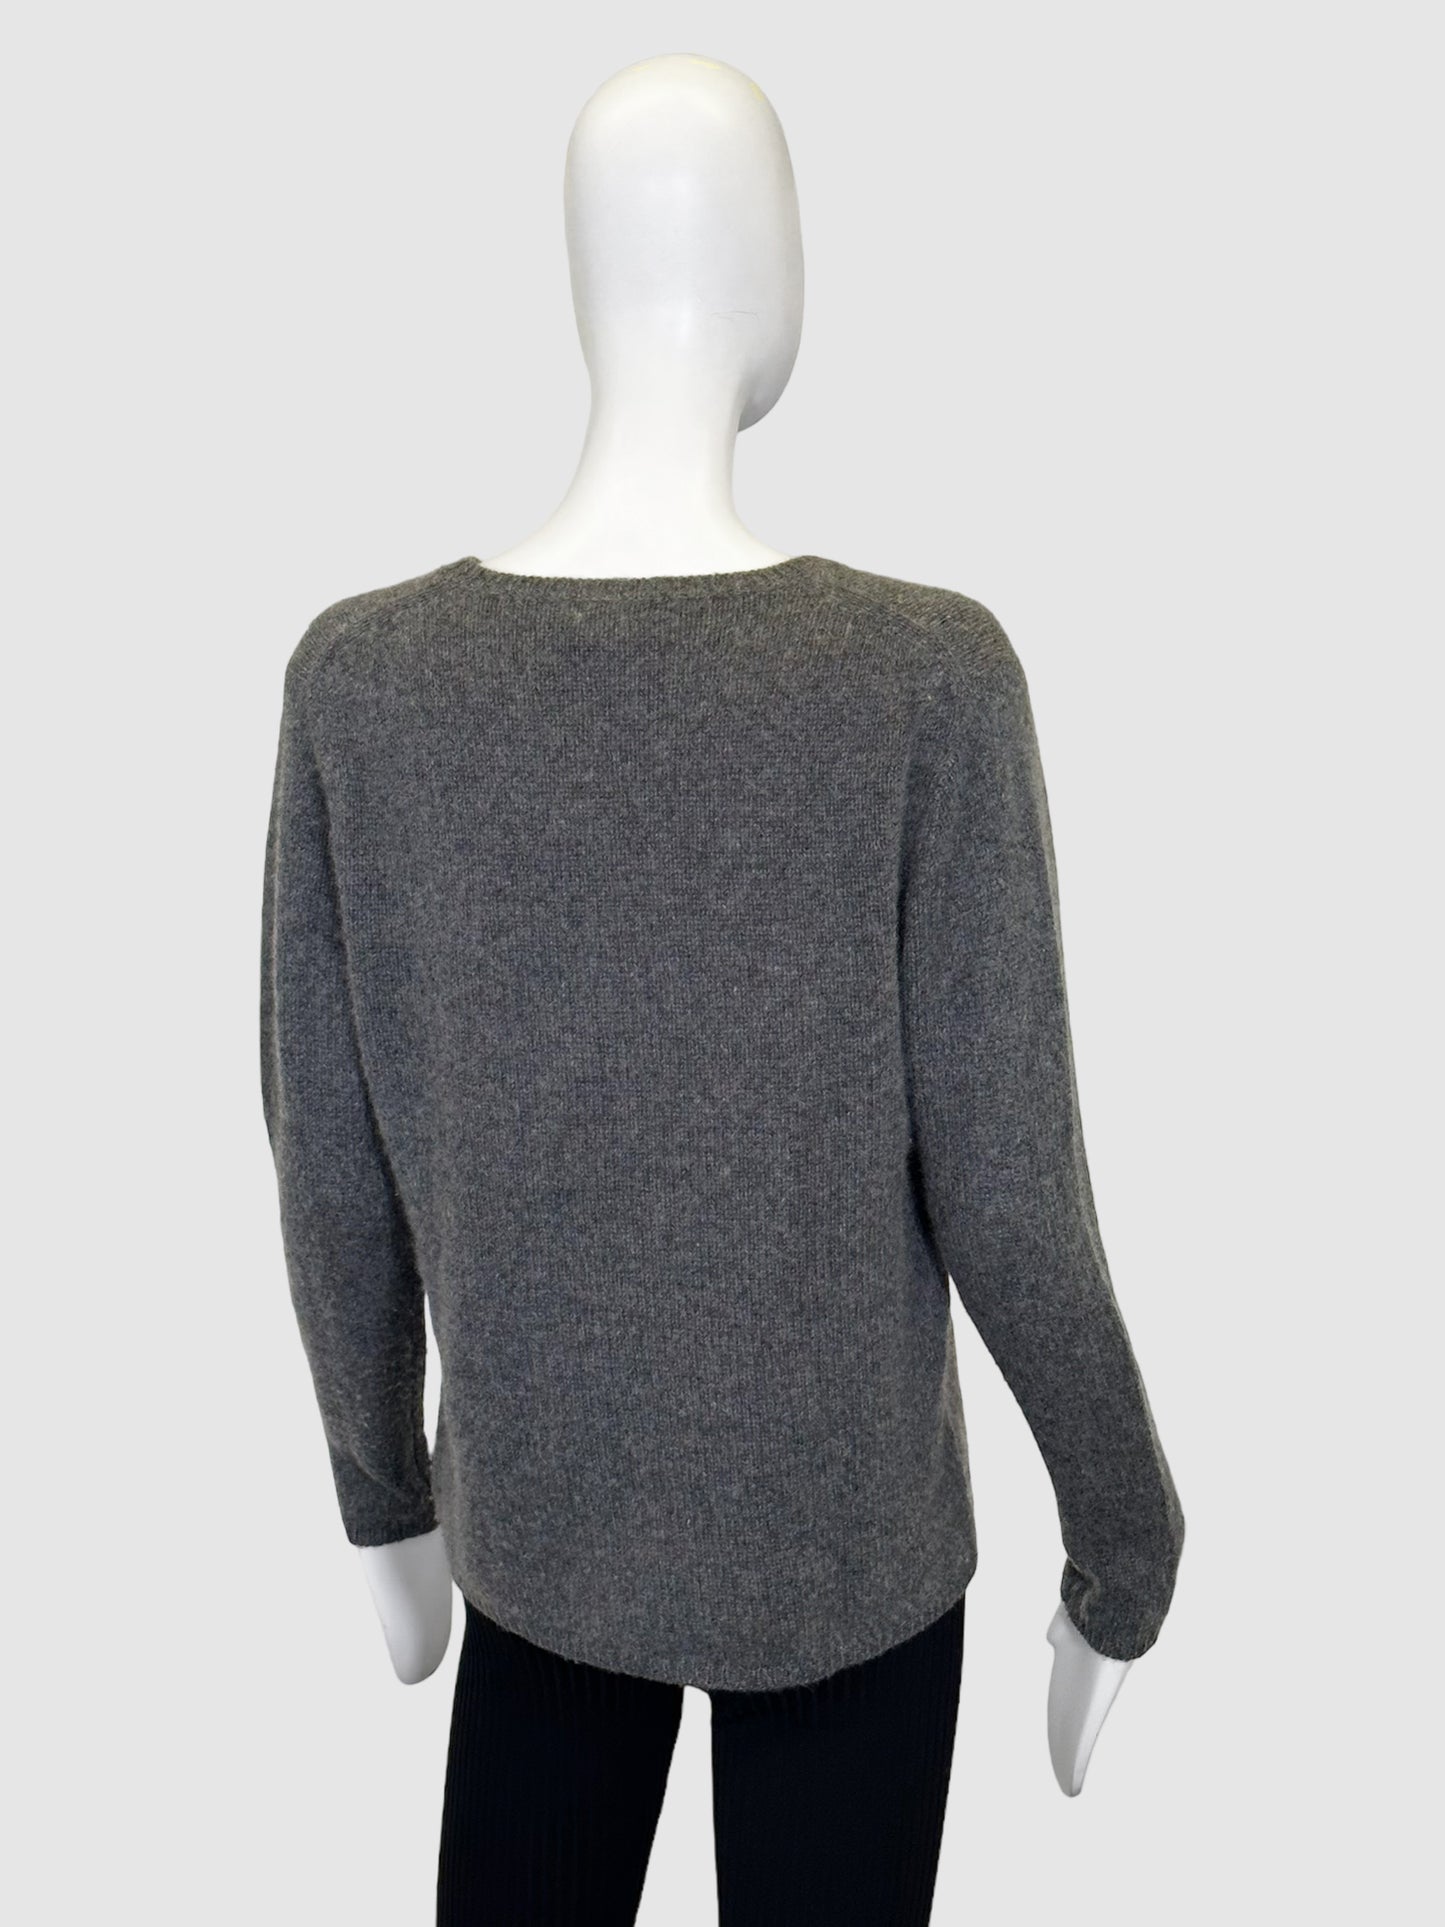 New Scotland Cashmere Crewneck Sweater - Size M